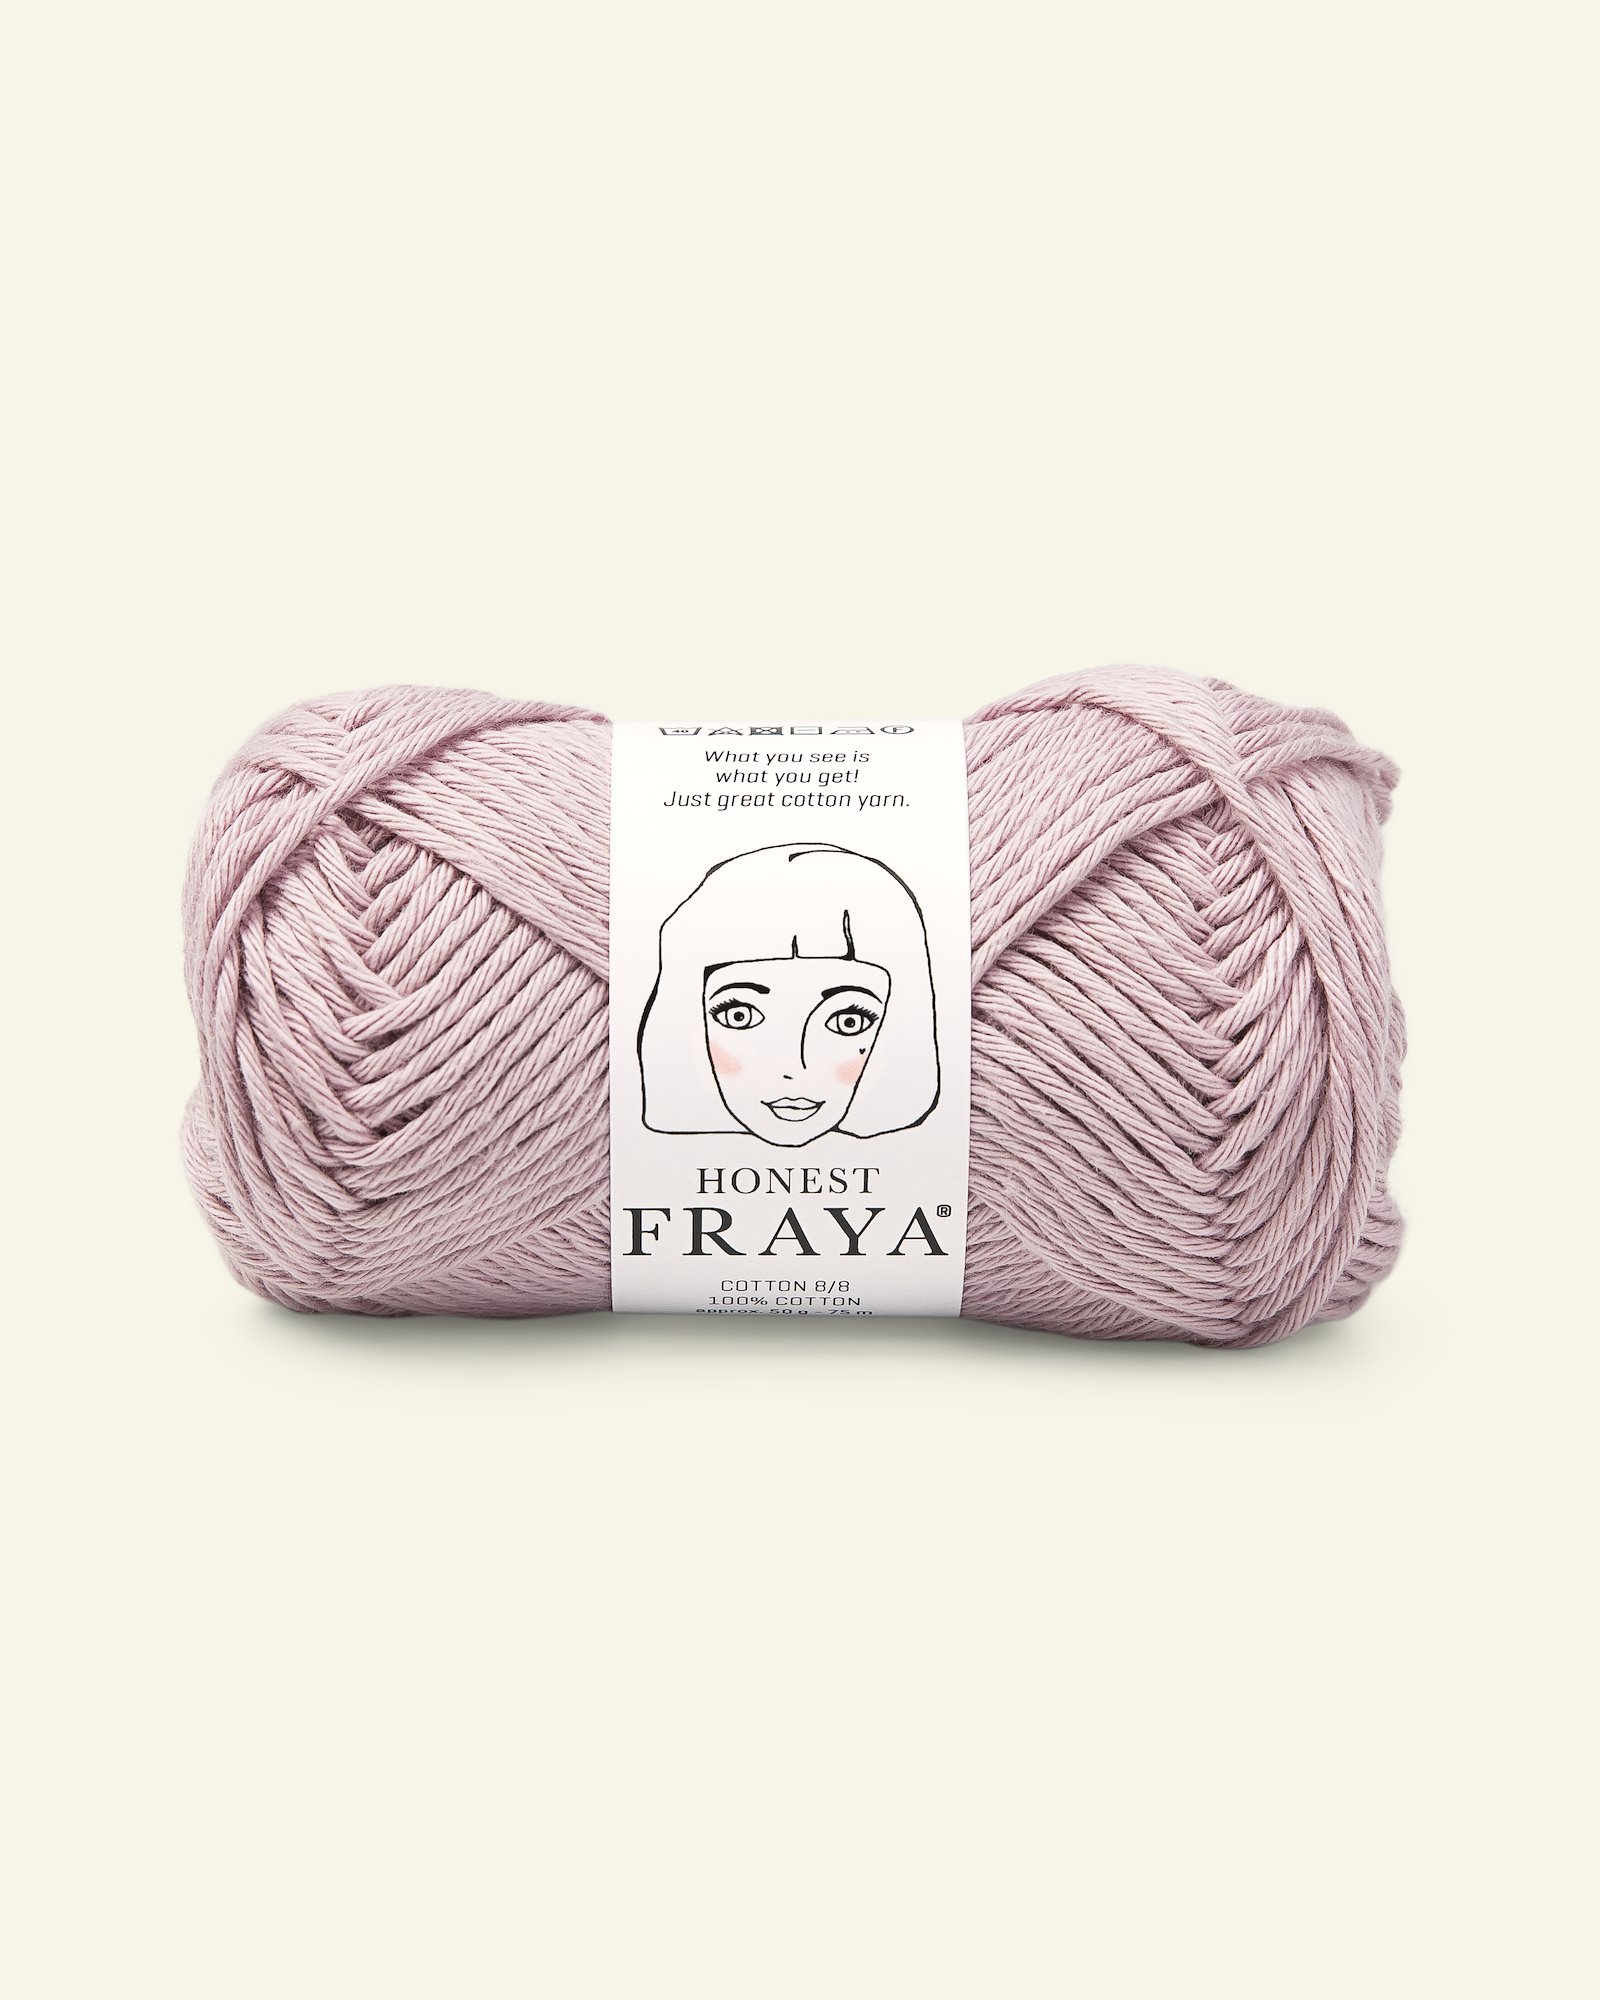 FRAYA, 100% cotton 8/8 yarn "Honest", light purple 90061068_pack